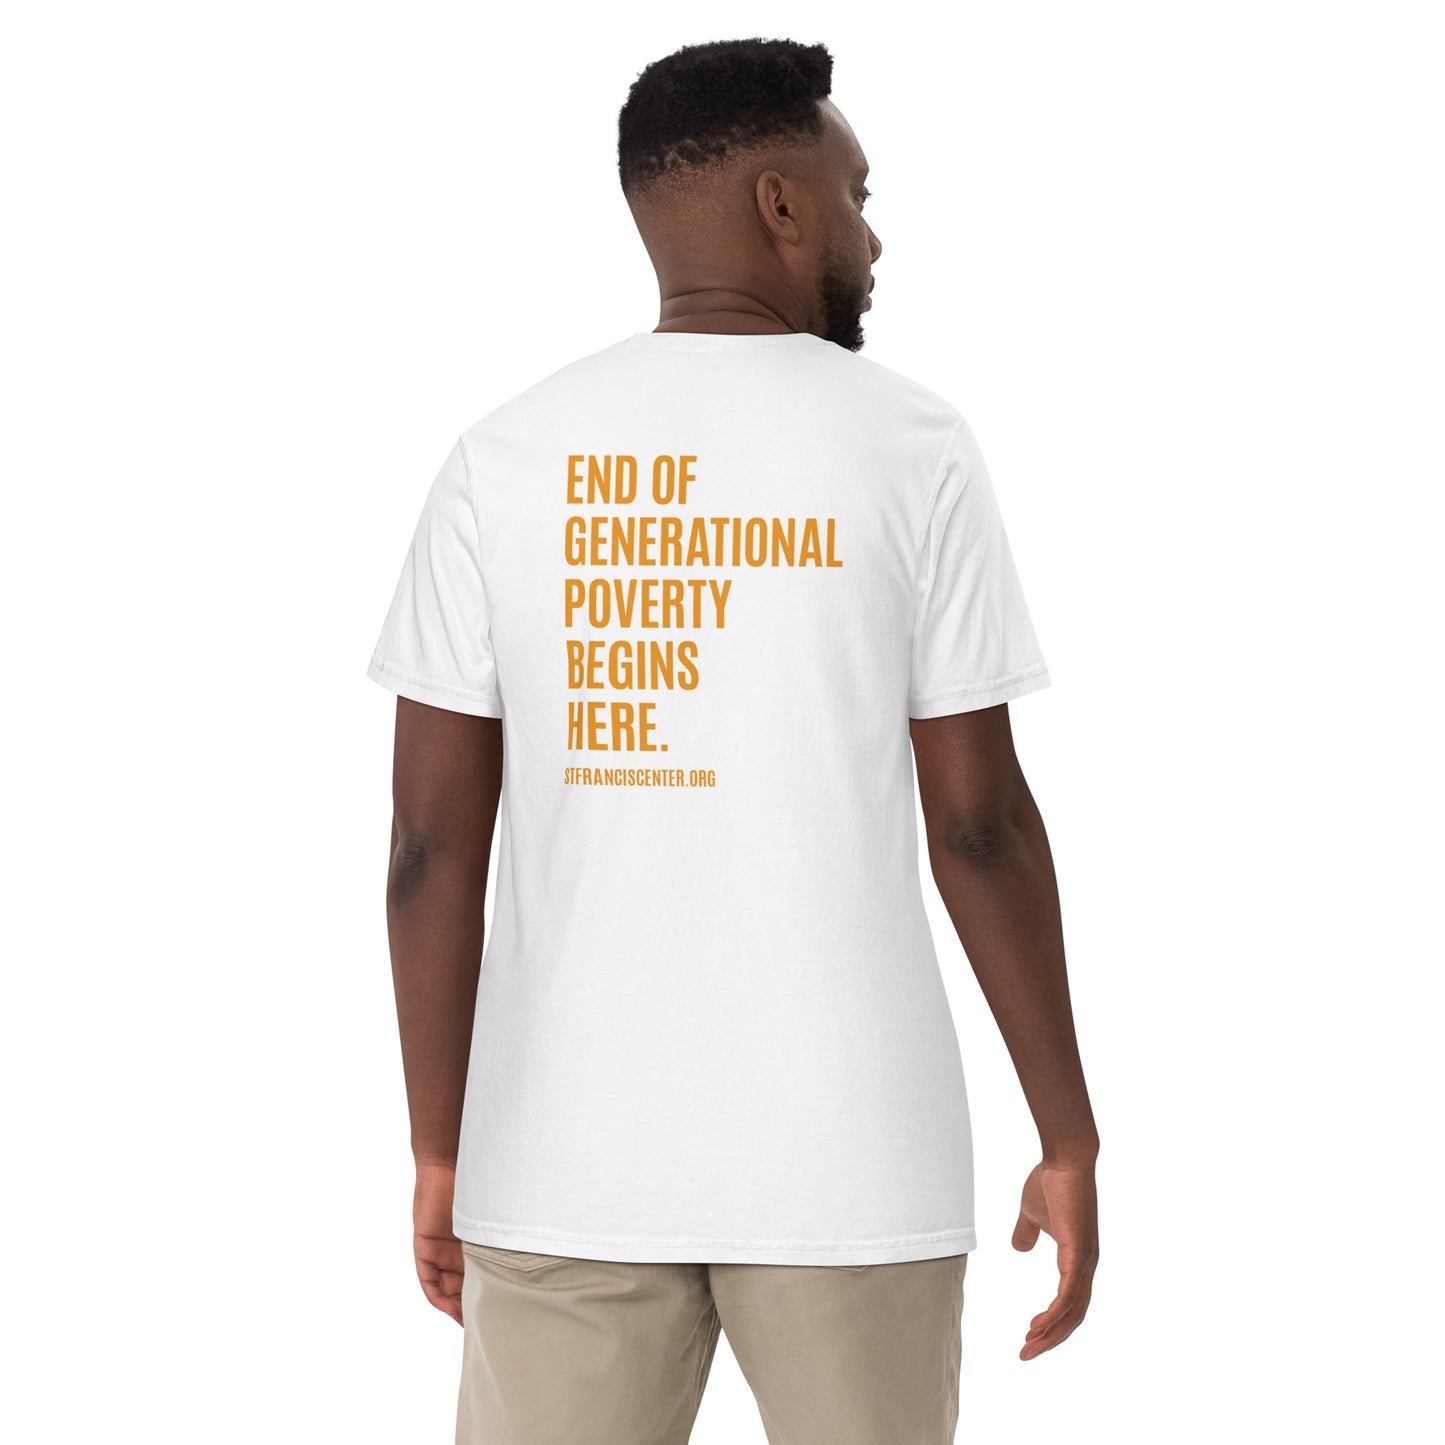 2020 Throwback SFNC T-Shirt (Orange)